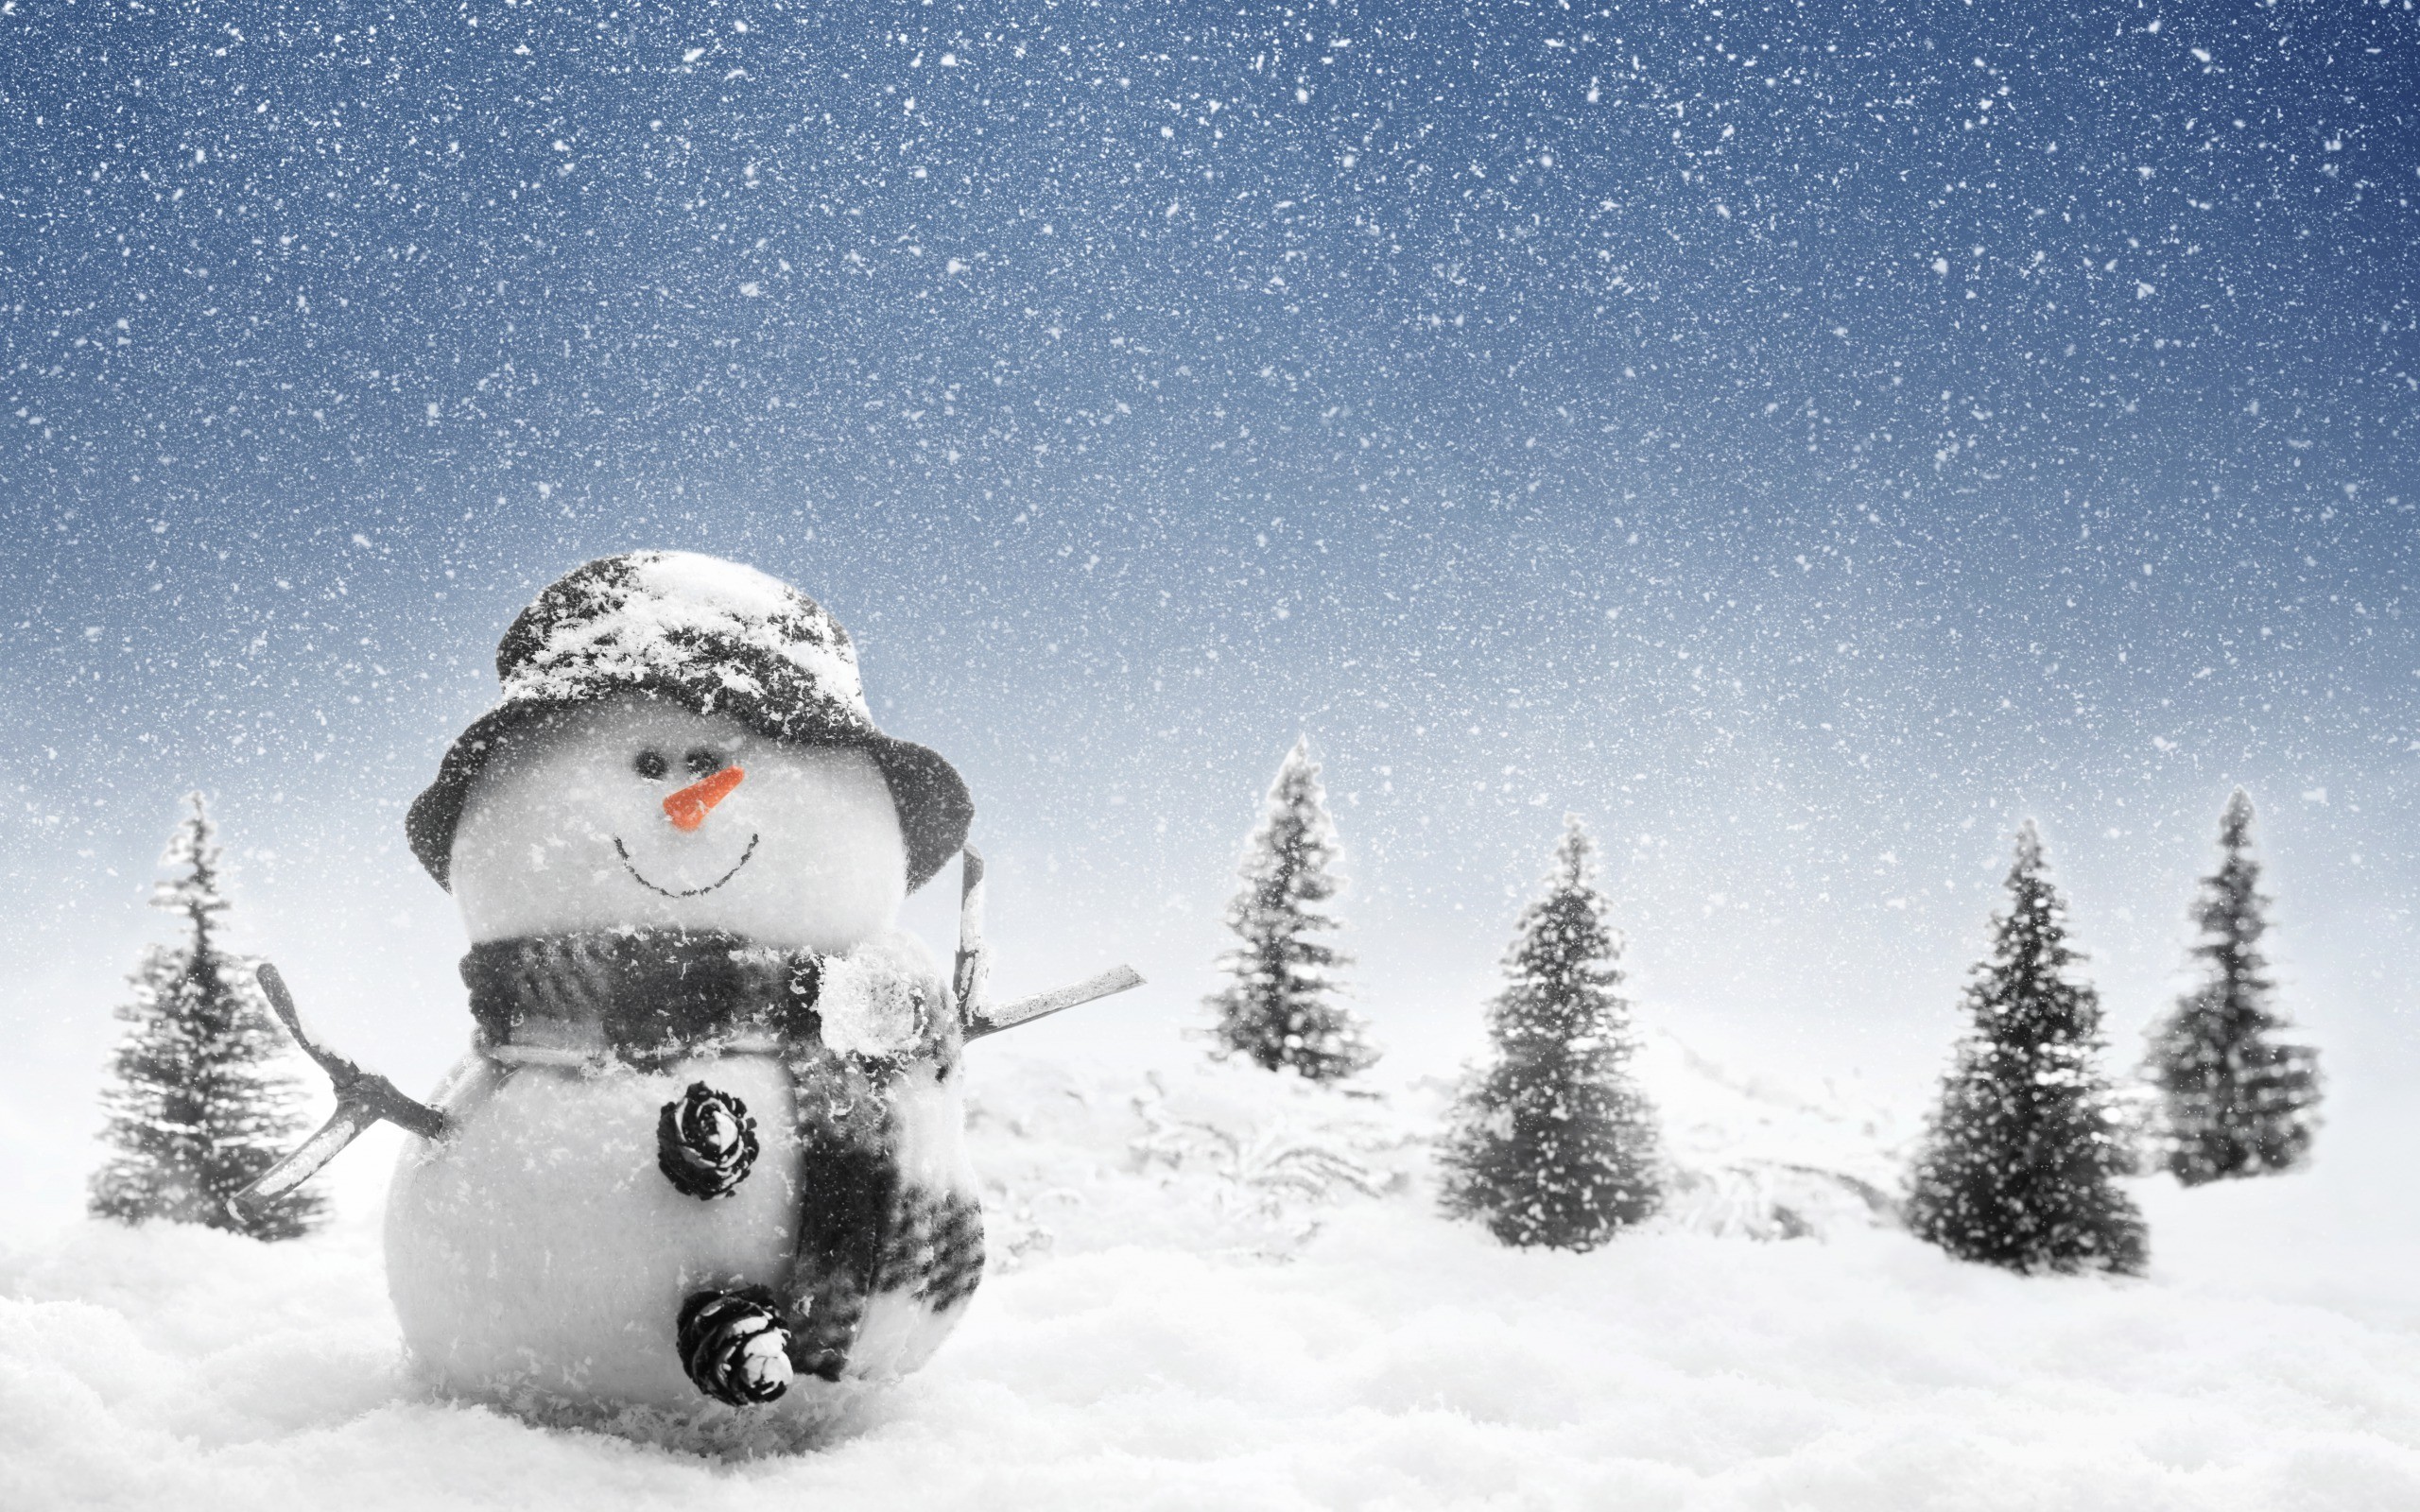 2560x1600 Snowman Wallpaper In Winter photos Free Christmas Snowman Wallpapers